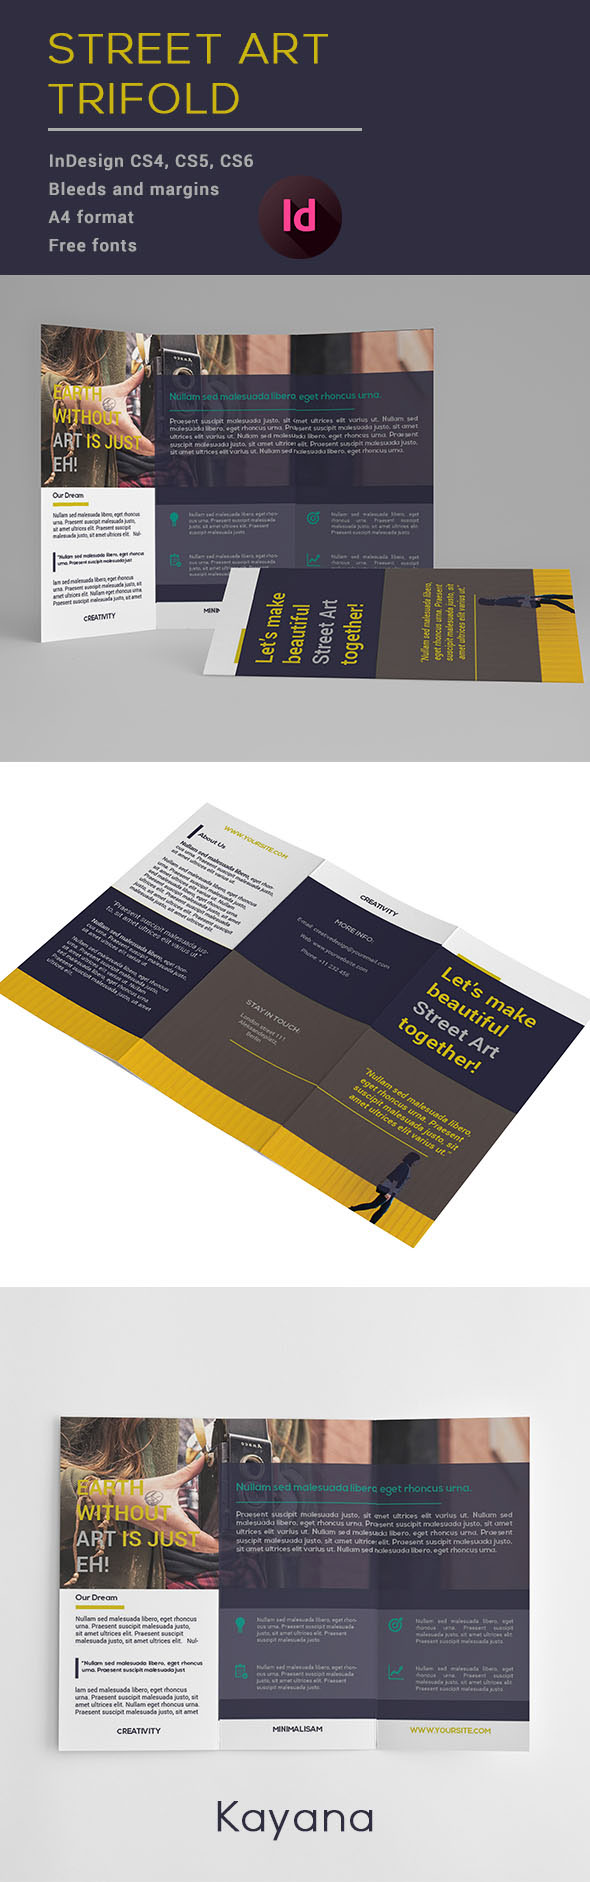 trifold tri-fold 3fold brochure a4 template print ready Multipurpose modern